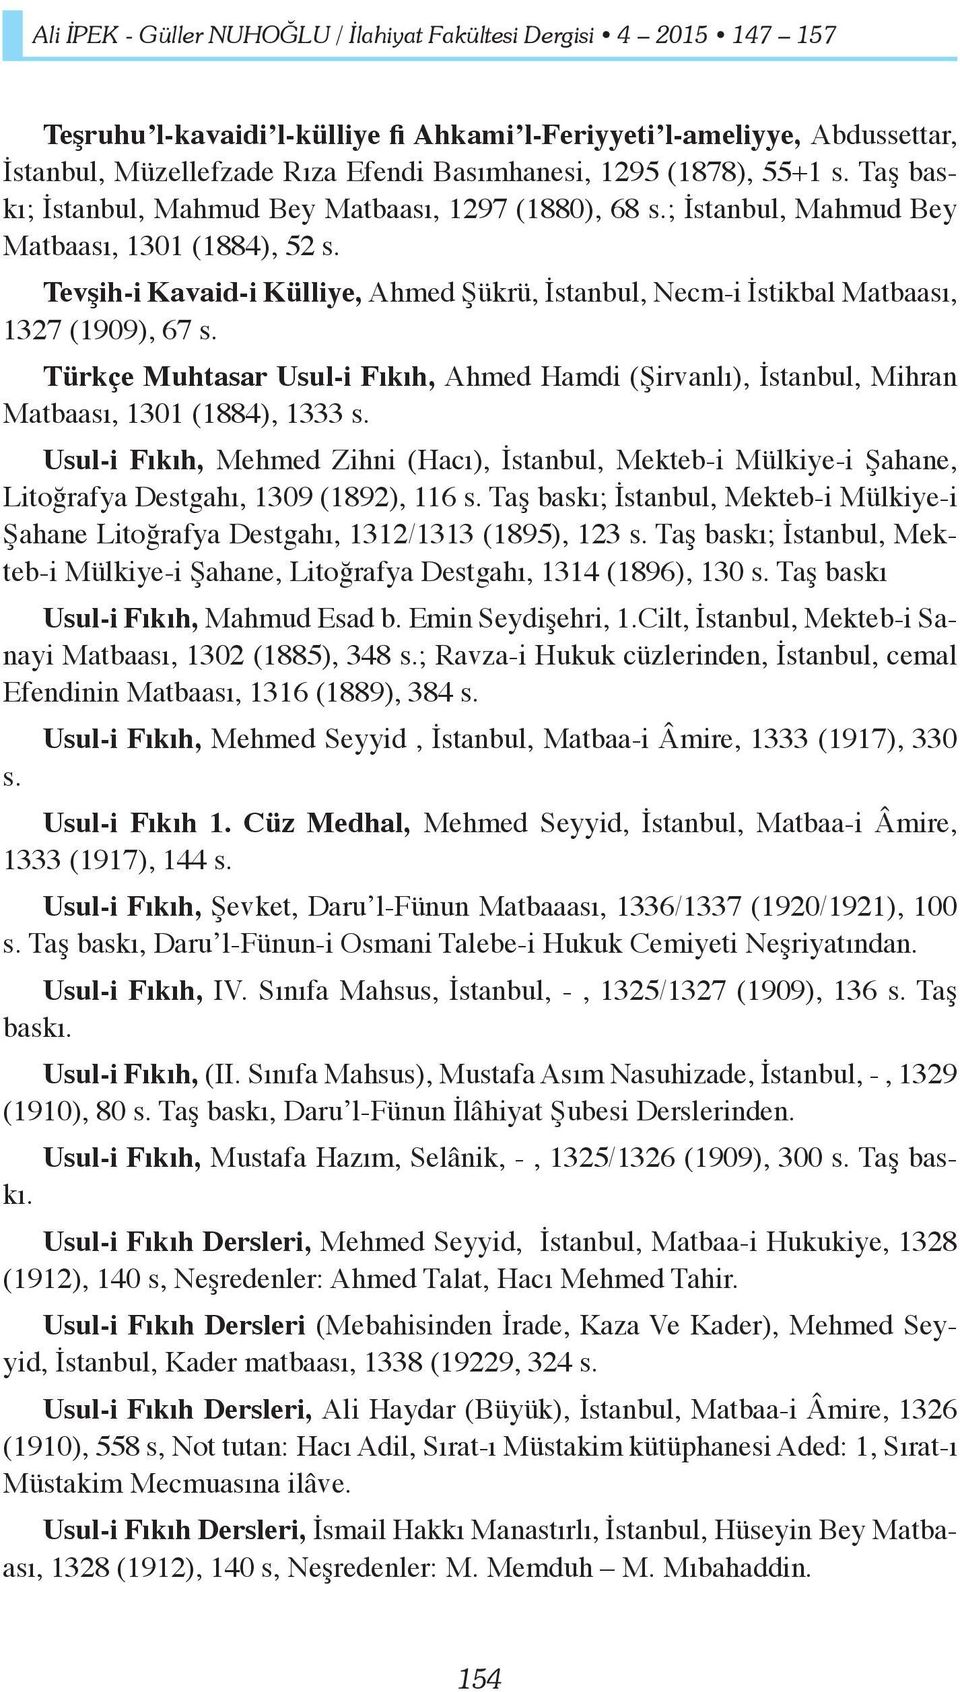 Tevşih-i Kavaid-i Külliye, Ahmed Şükrü, İstanbul, Necm-i İstikbal Matbaası, 1327 (1909), 67 s. Türkçe Muhtasar Usul-i Fıkıh, Ahmed Hamdi (Şirvanlı), İstanbul, Mihran Matbaası, 1301 (1884), 1333 s.